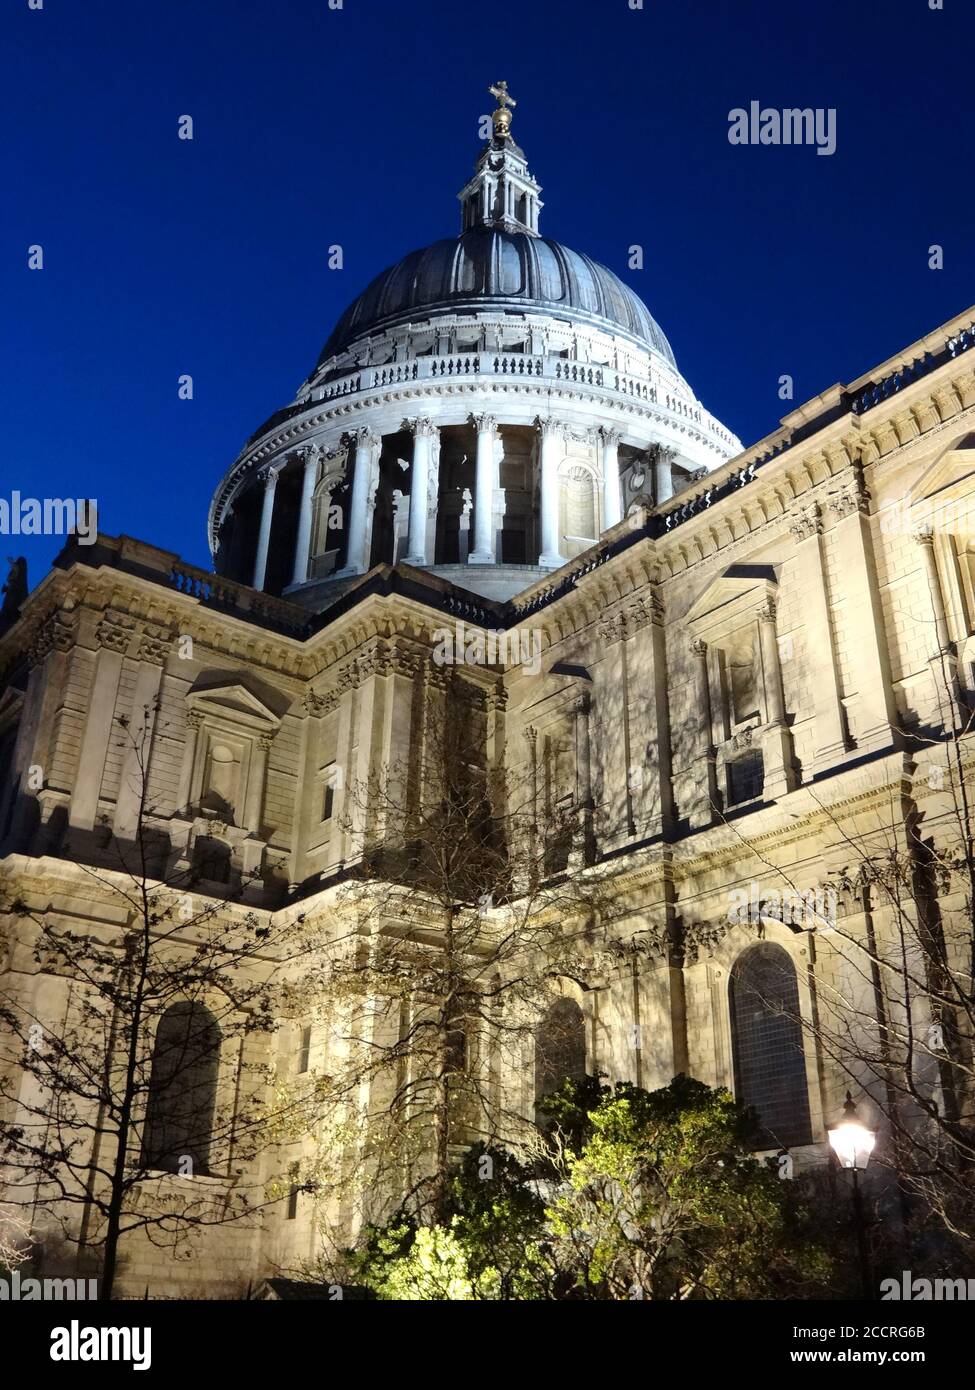 Cattedrale di St Paul, Londra, Inghilterra, costruita di notte Sir Christopher Wren è una popolare destinazione turistica stock di punti di riferimento per le attrazioni p Foto Stock